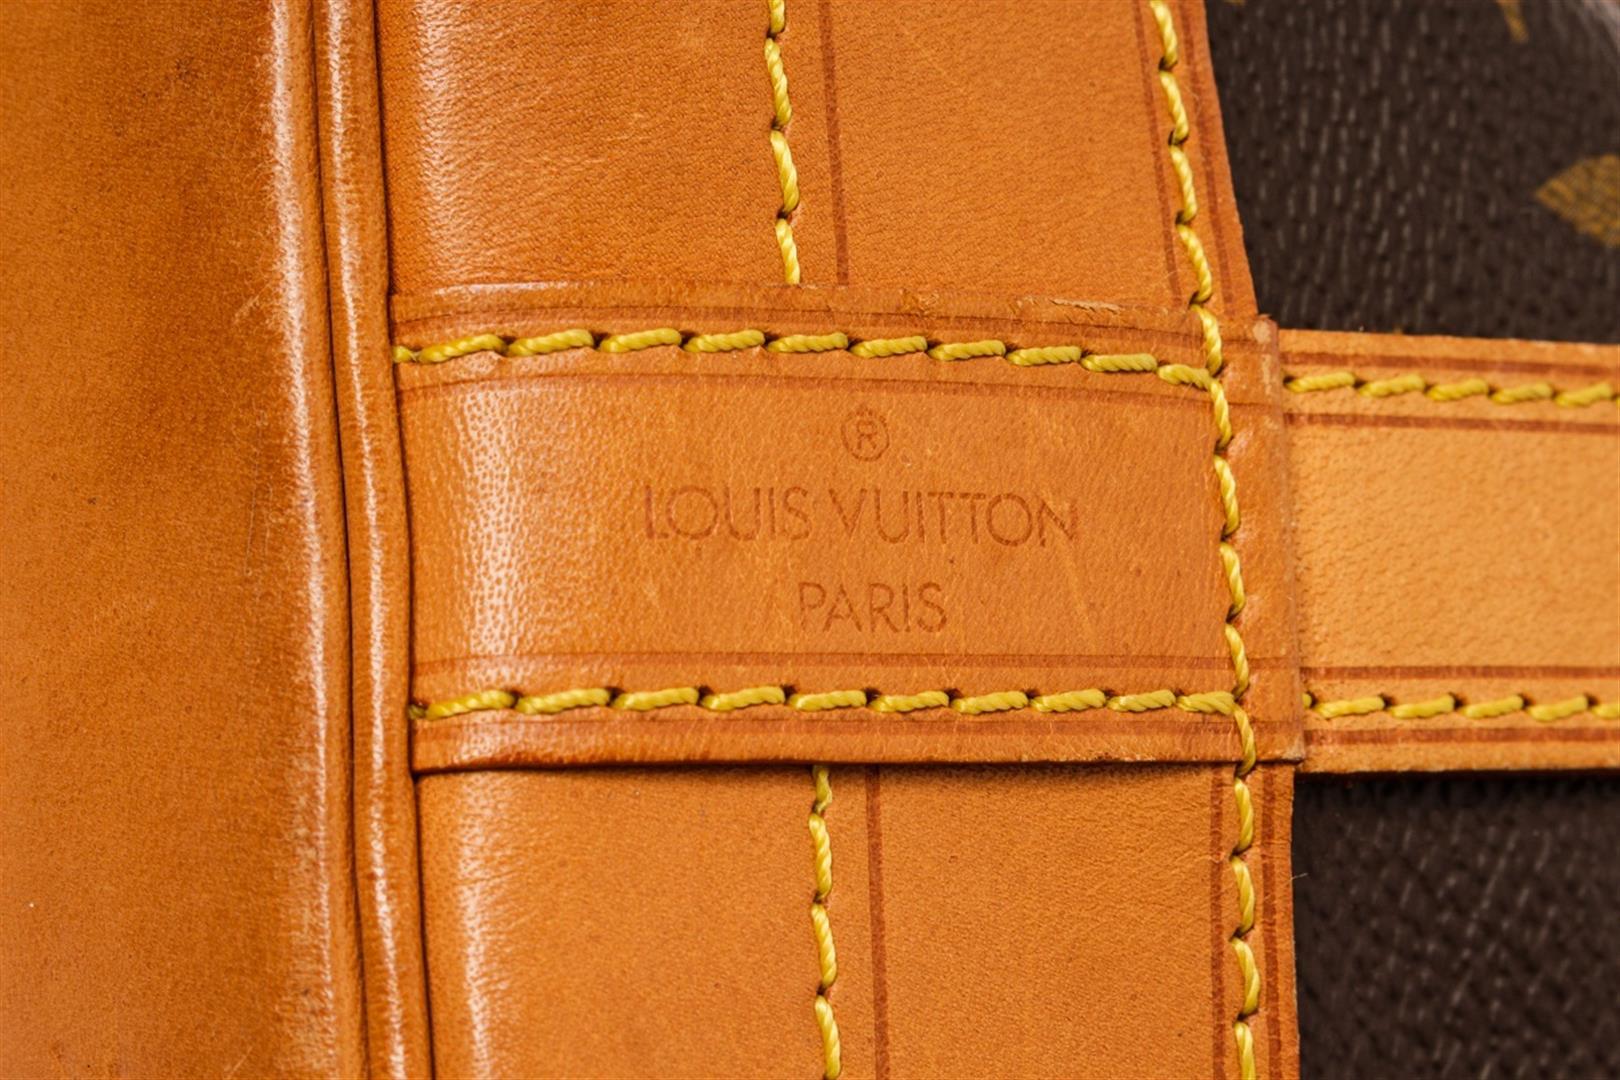 Louis Vuitton Brown Monogram Noe Shoulder Bag